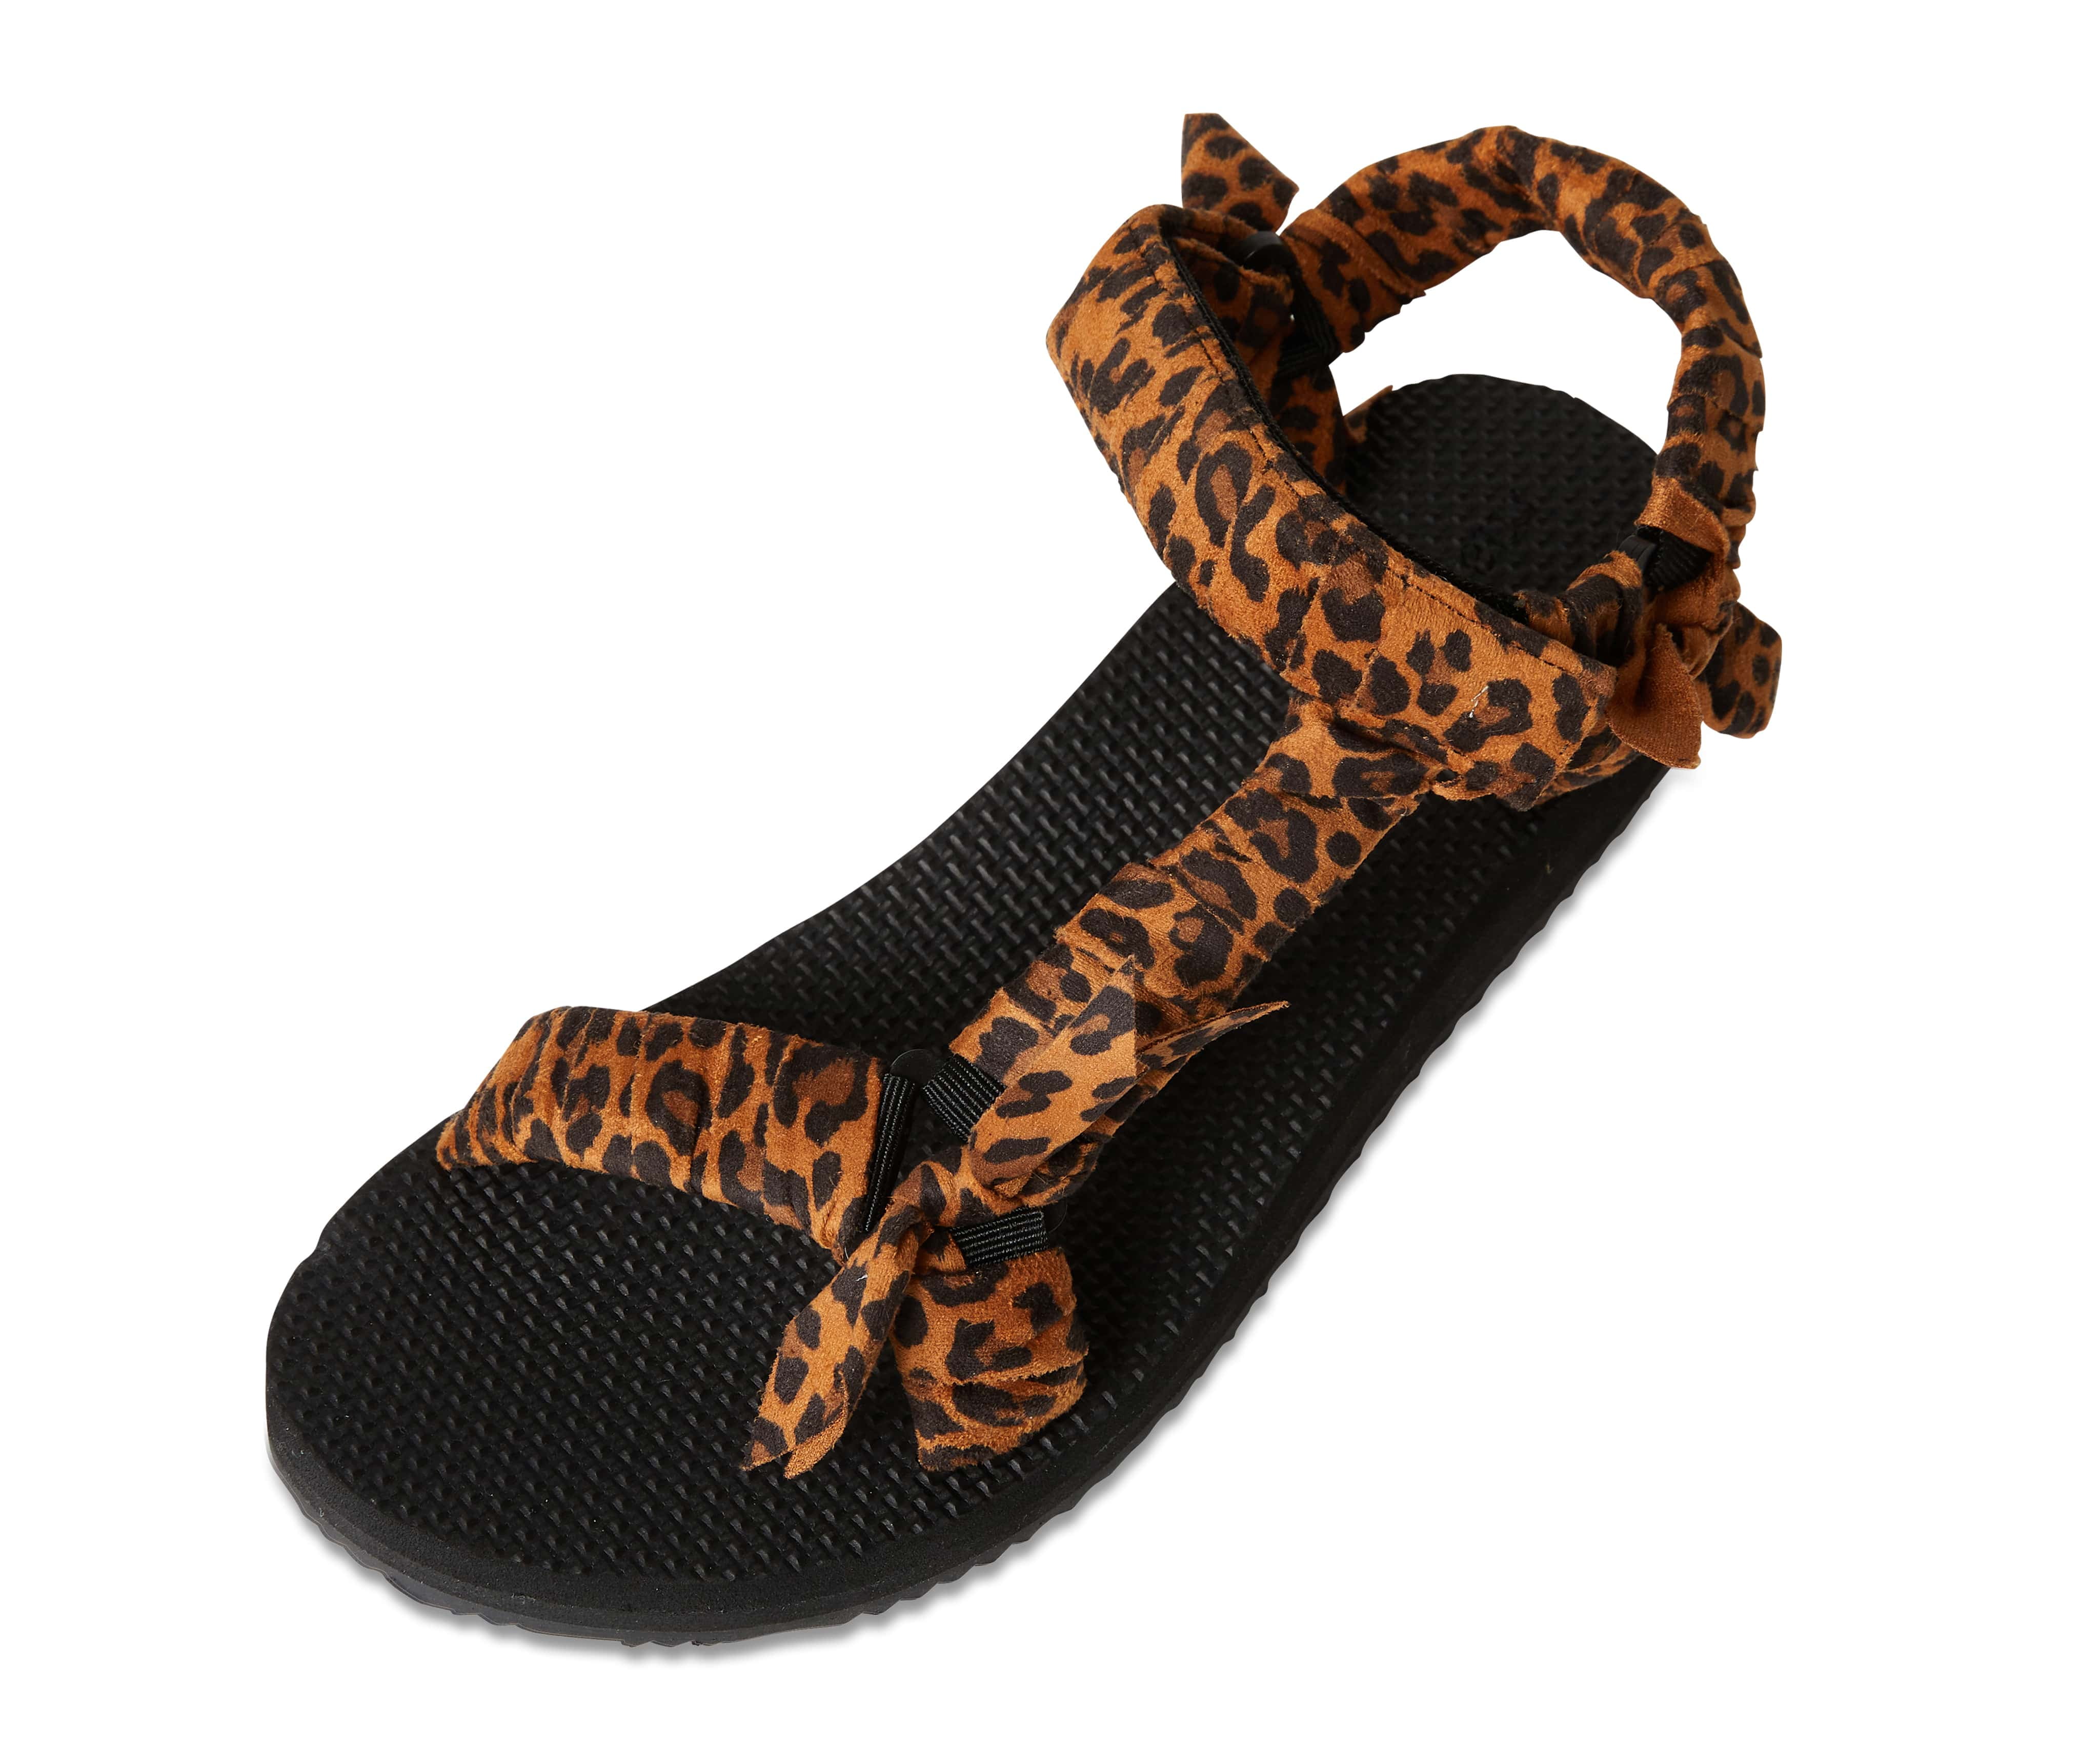 Women's Original Sandals Sport Sandals with Yoga Mat Insole Hiking Sandals Light-Weight Shoes 